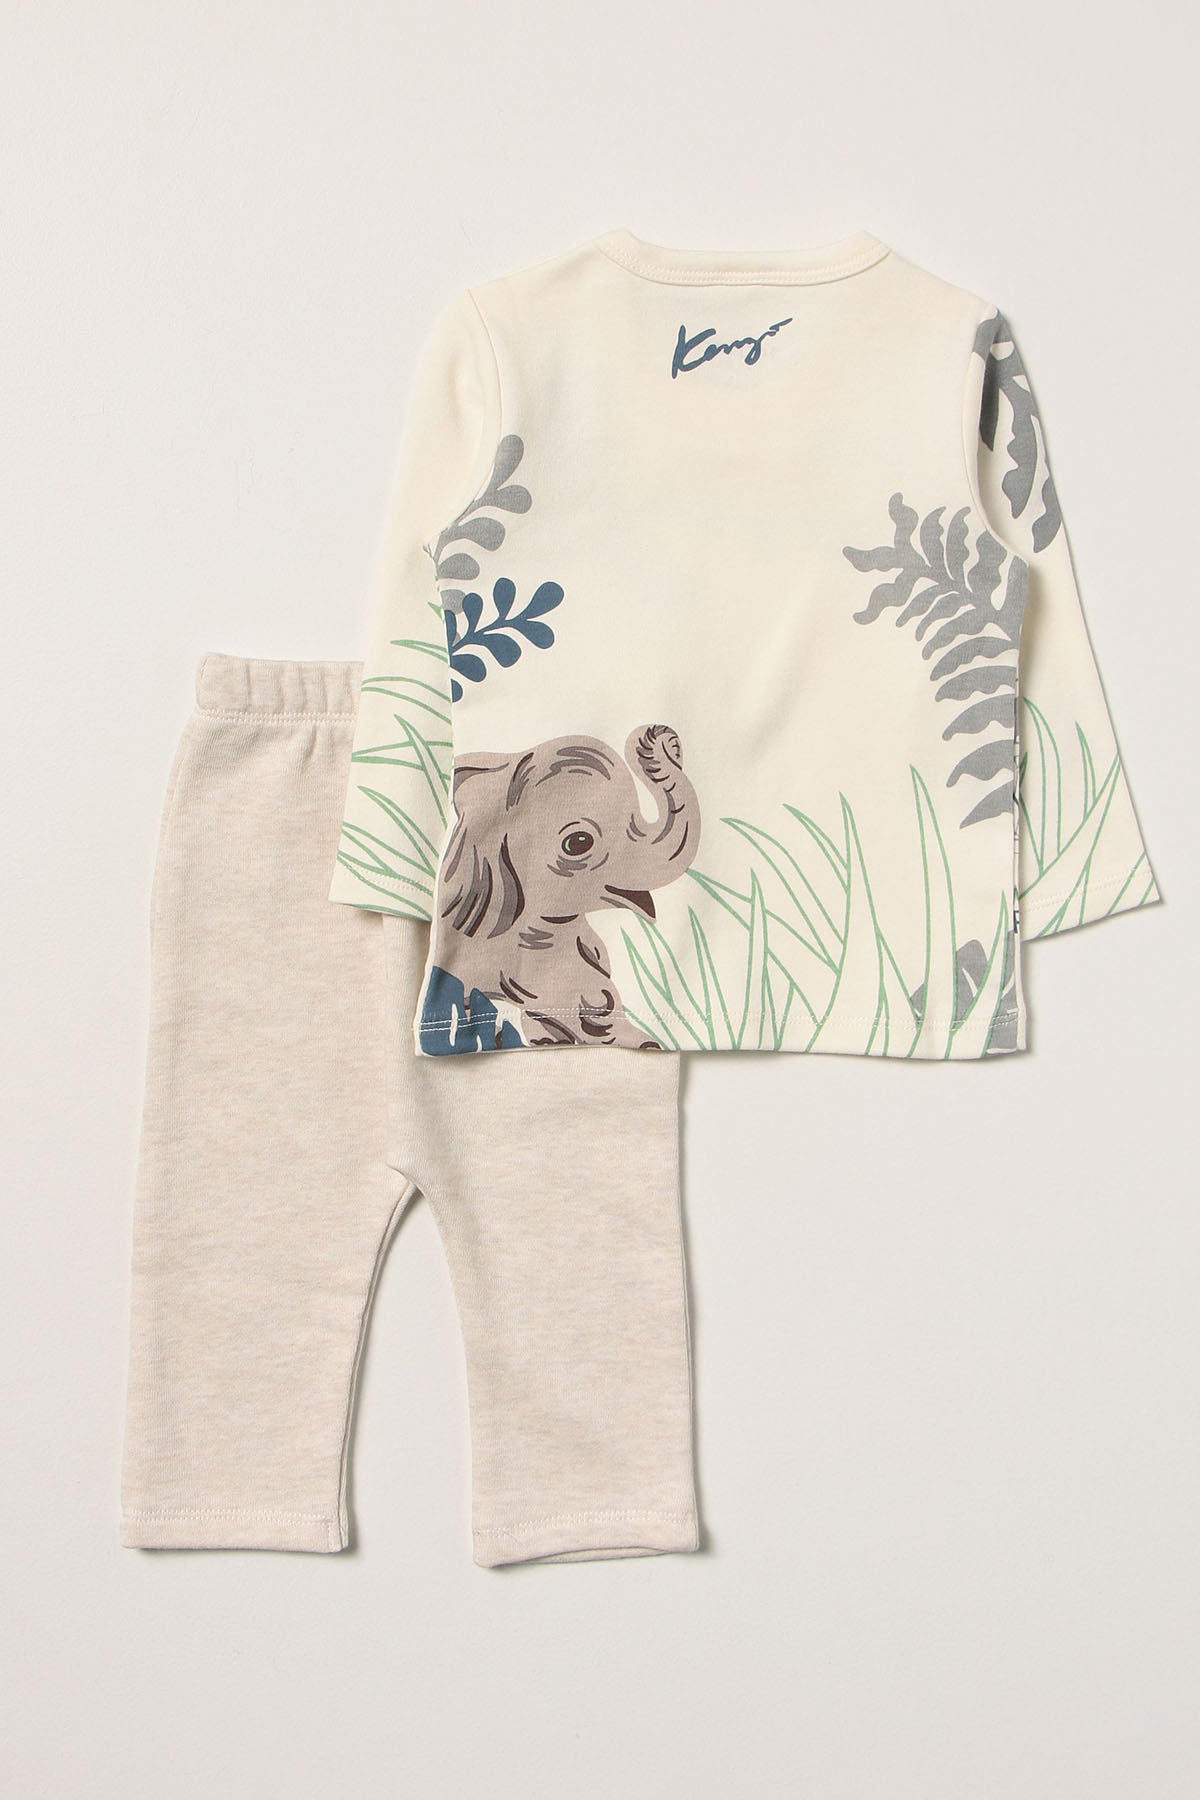 Kenzo Kids 12 Aylık Erkek Bebek Eşofman Takımı-Libas Trendy Fashion Store